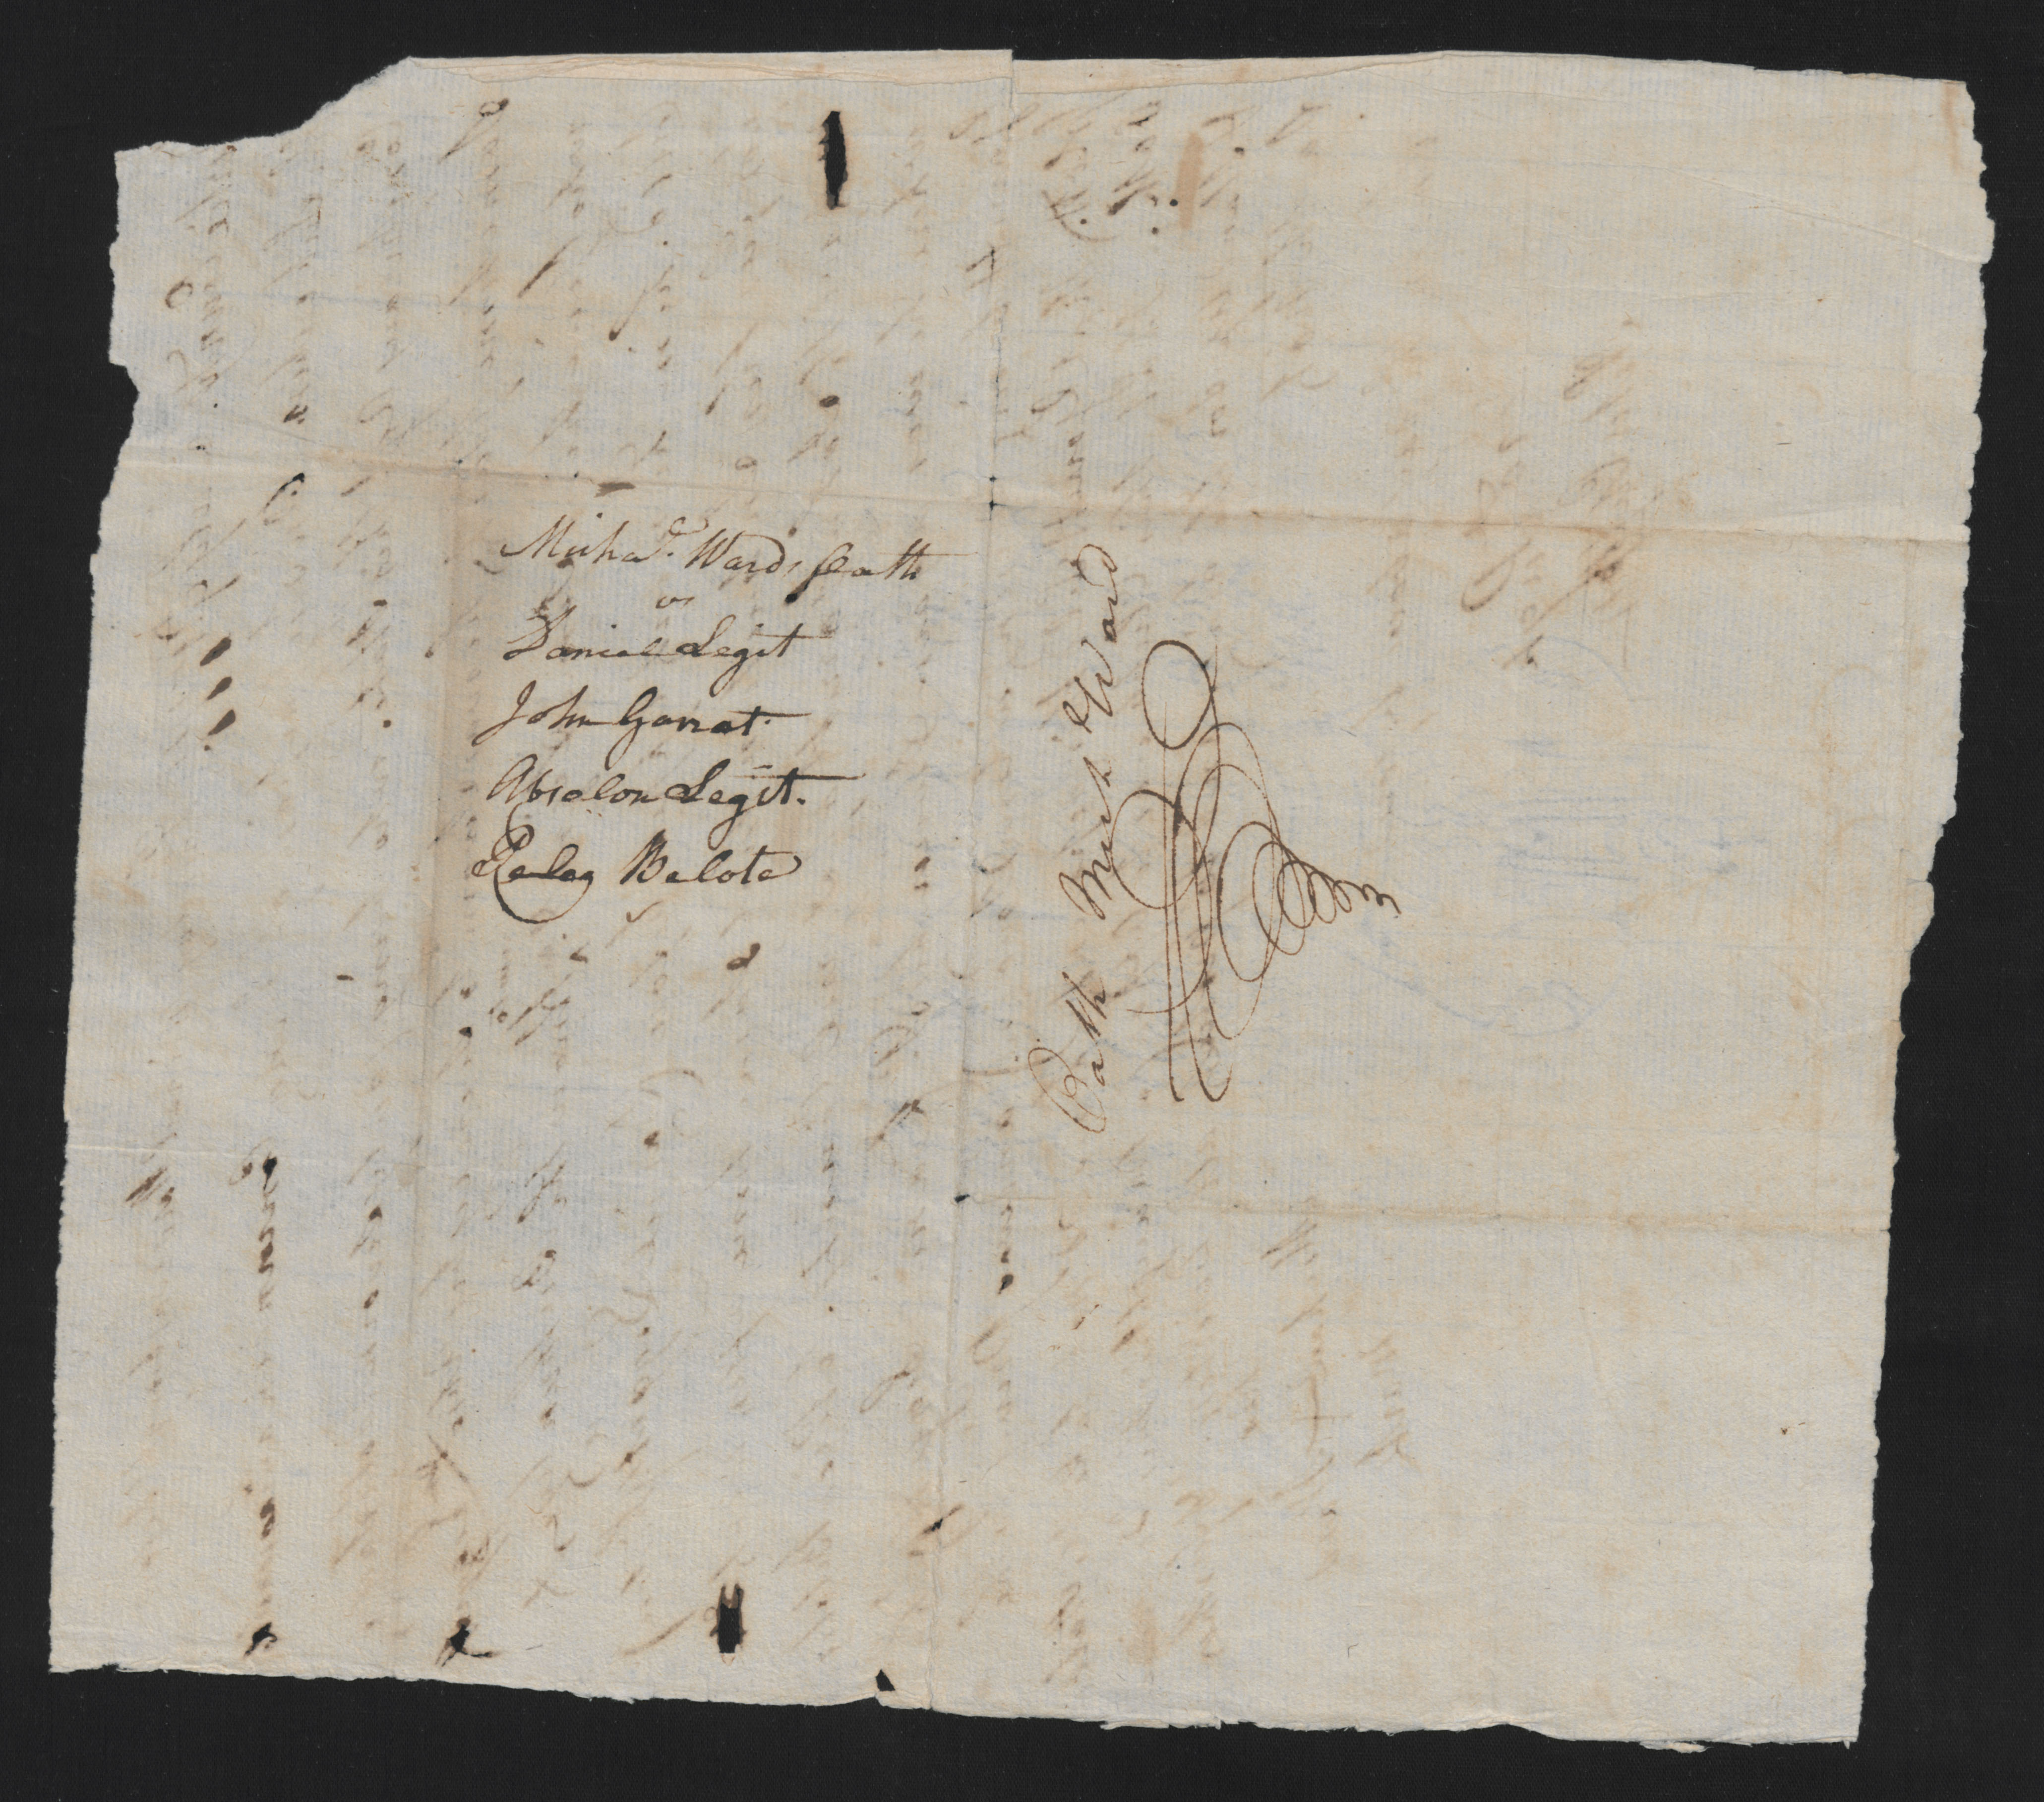 Reverse of deposition of Michael Ward, 9 July 1777